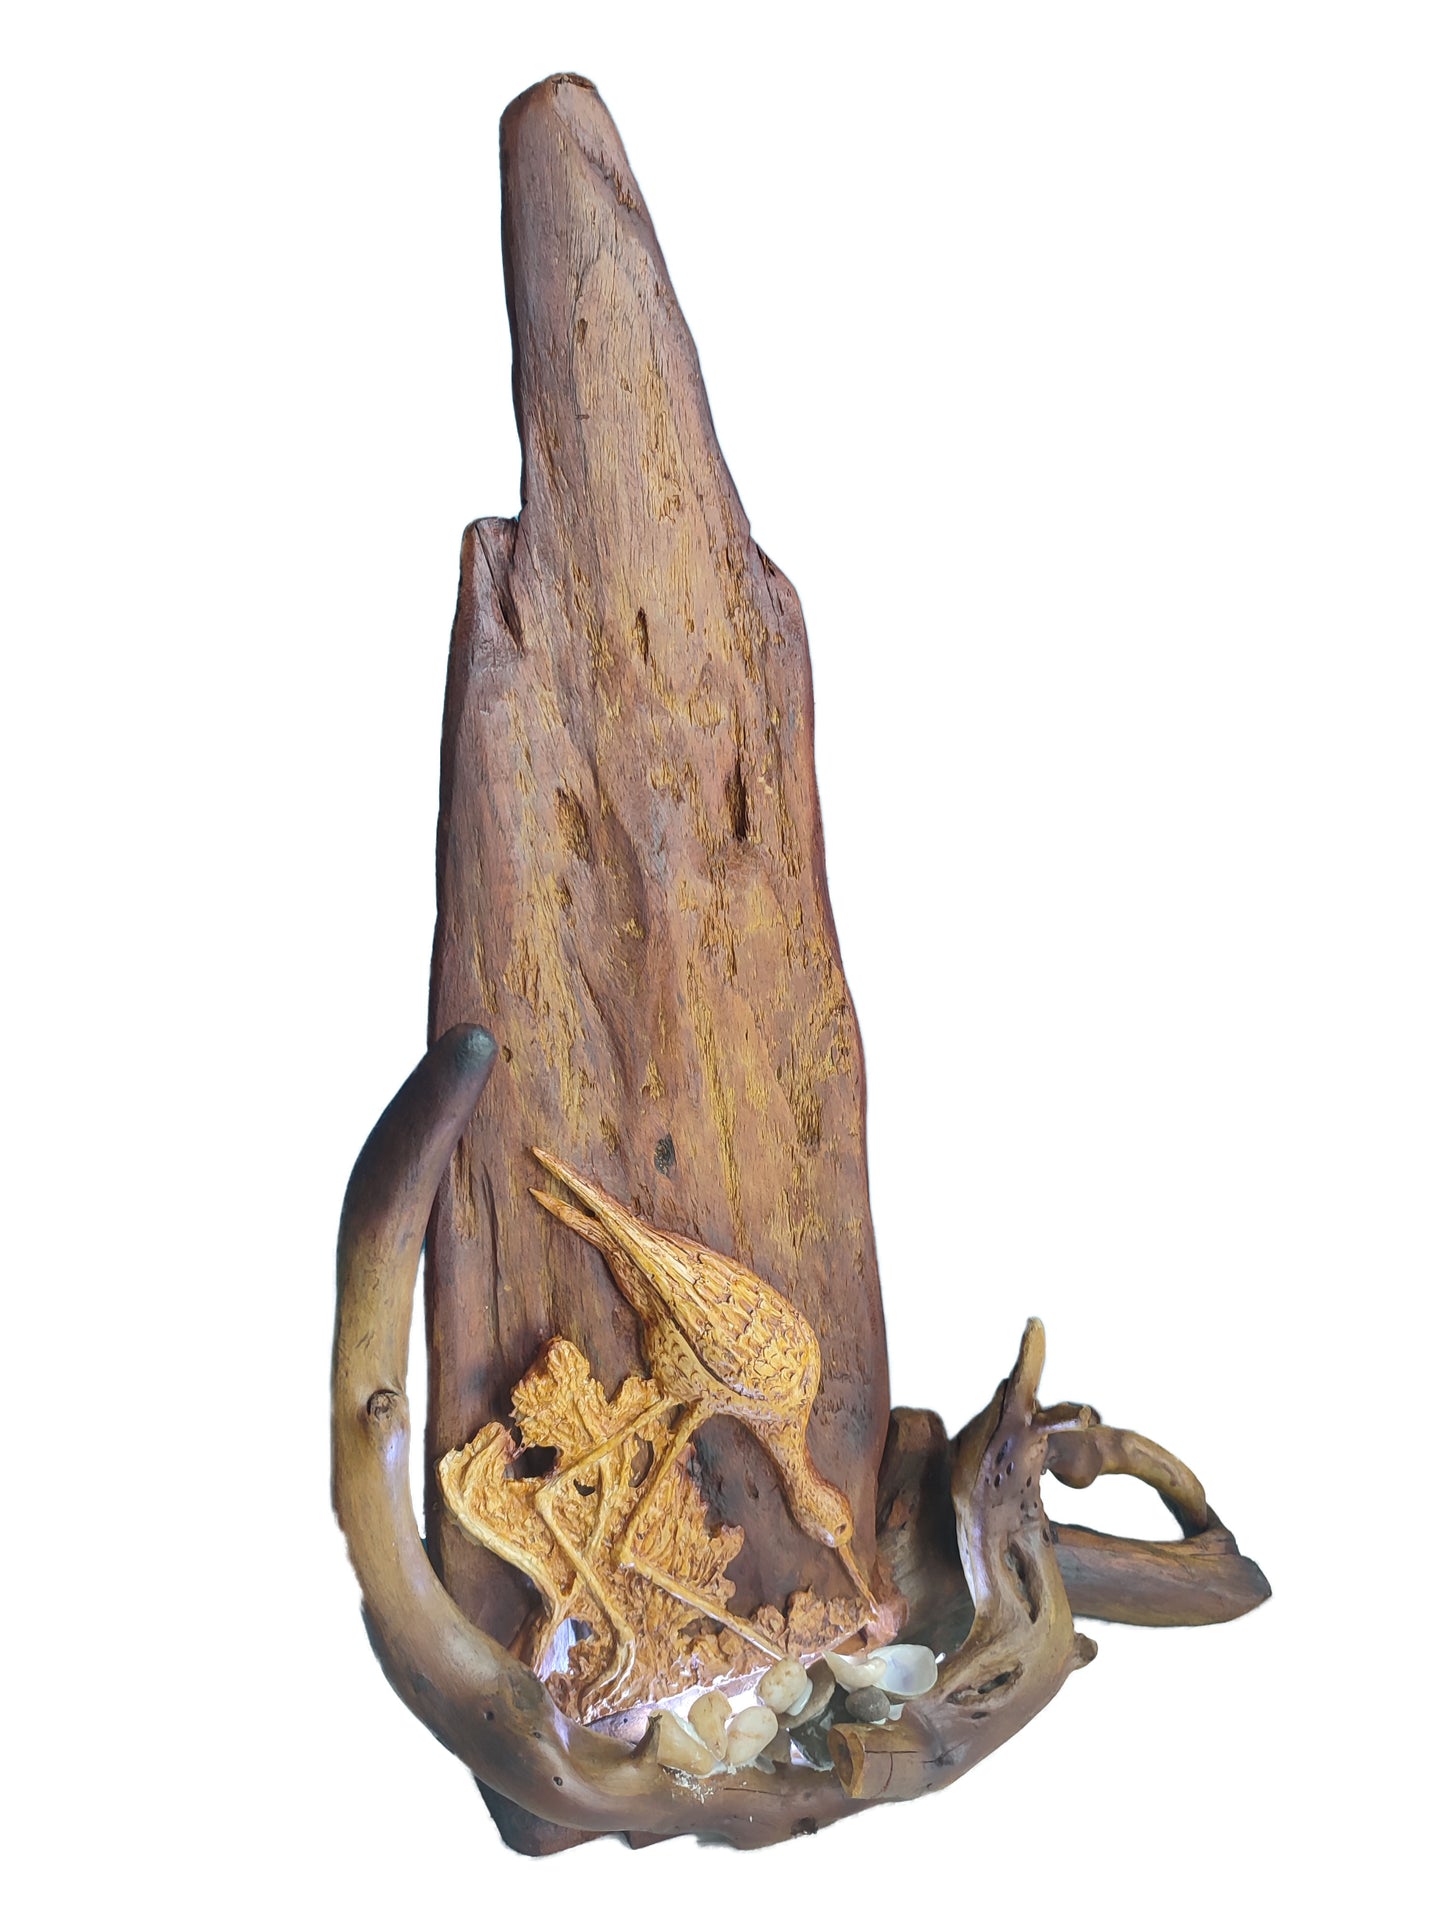 driftwood lamp handmade - kmnk deco